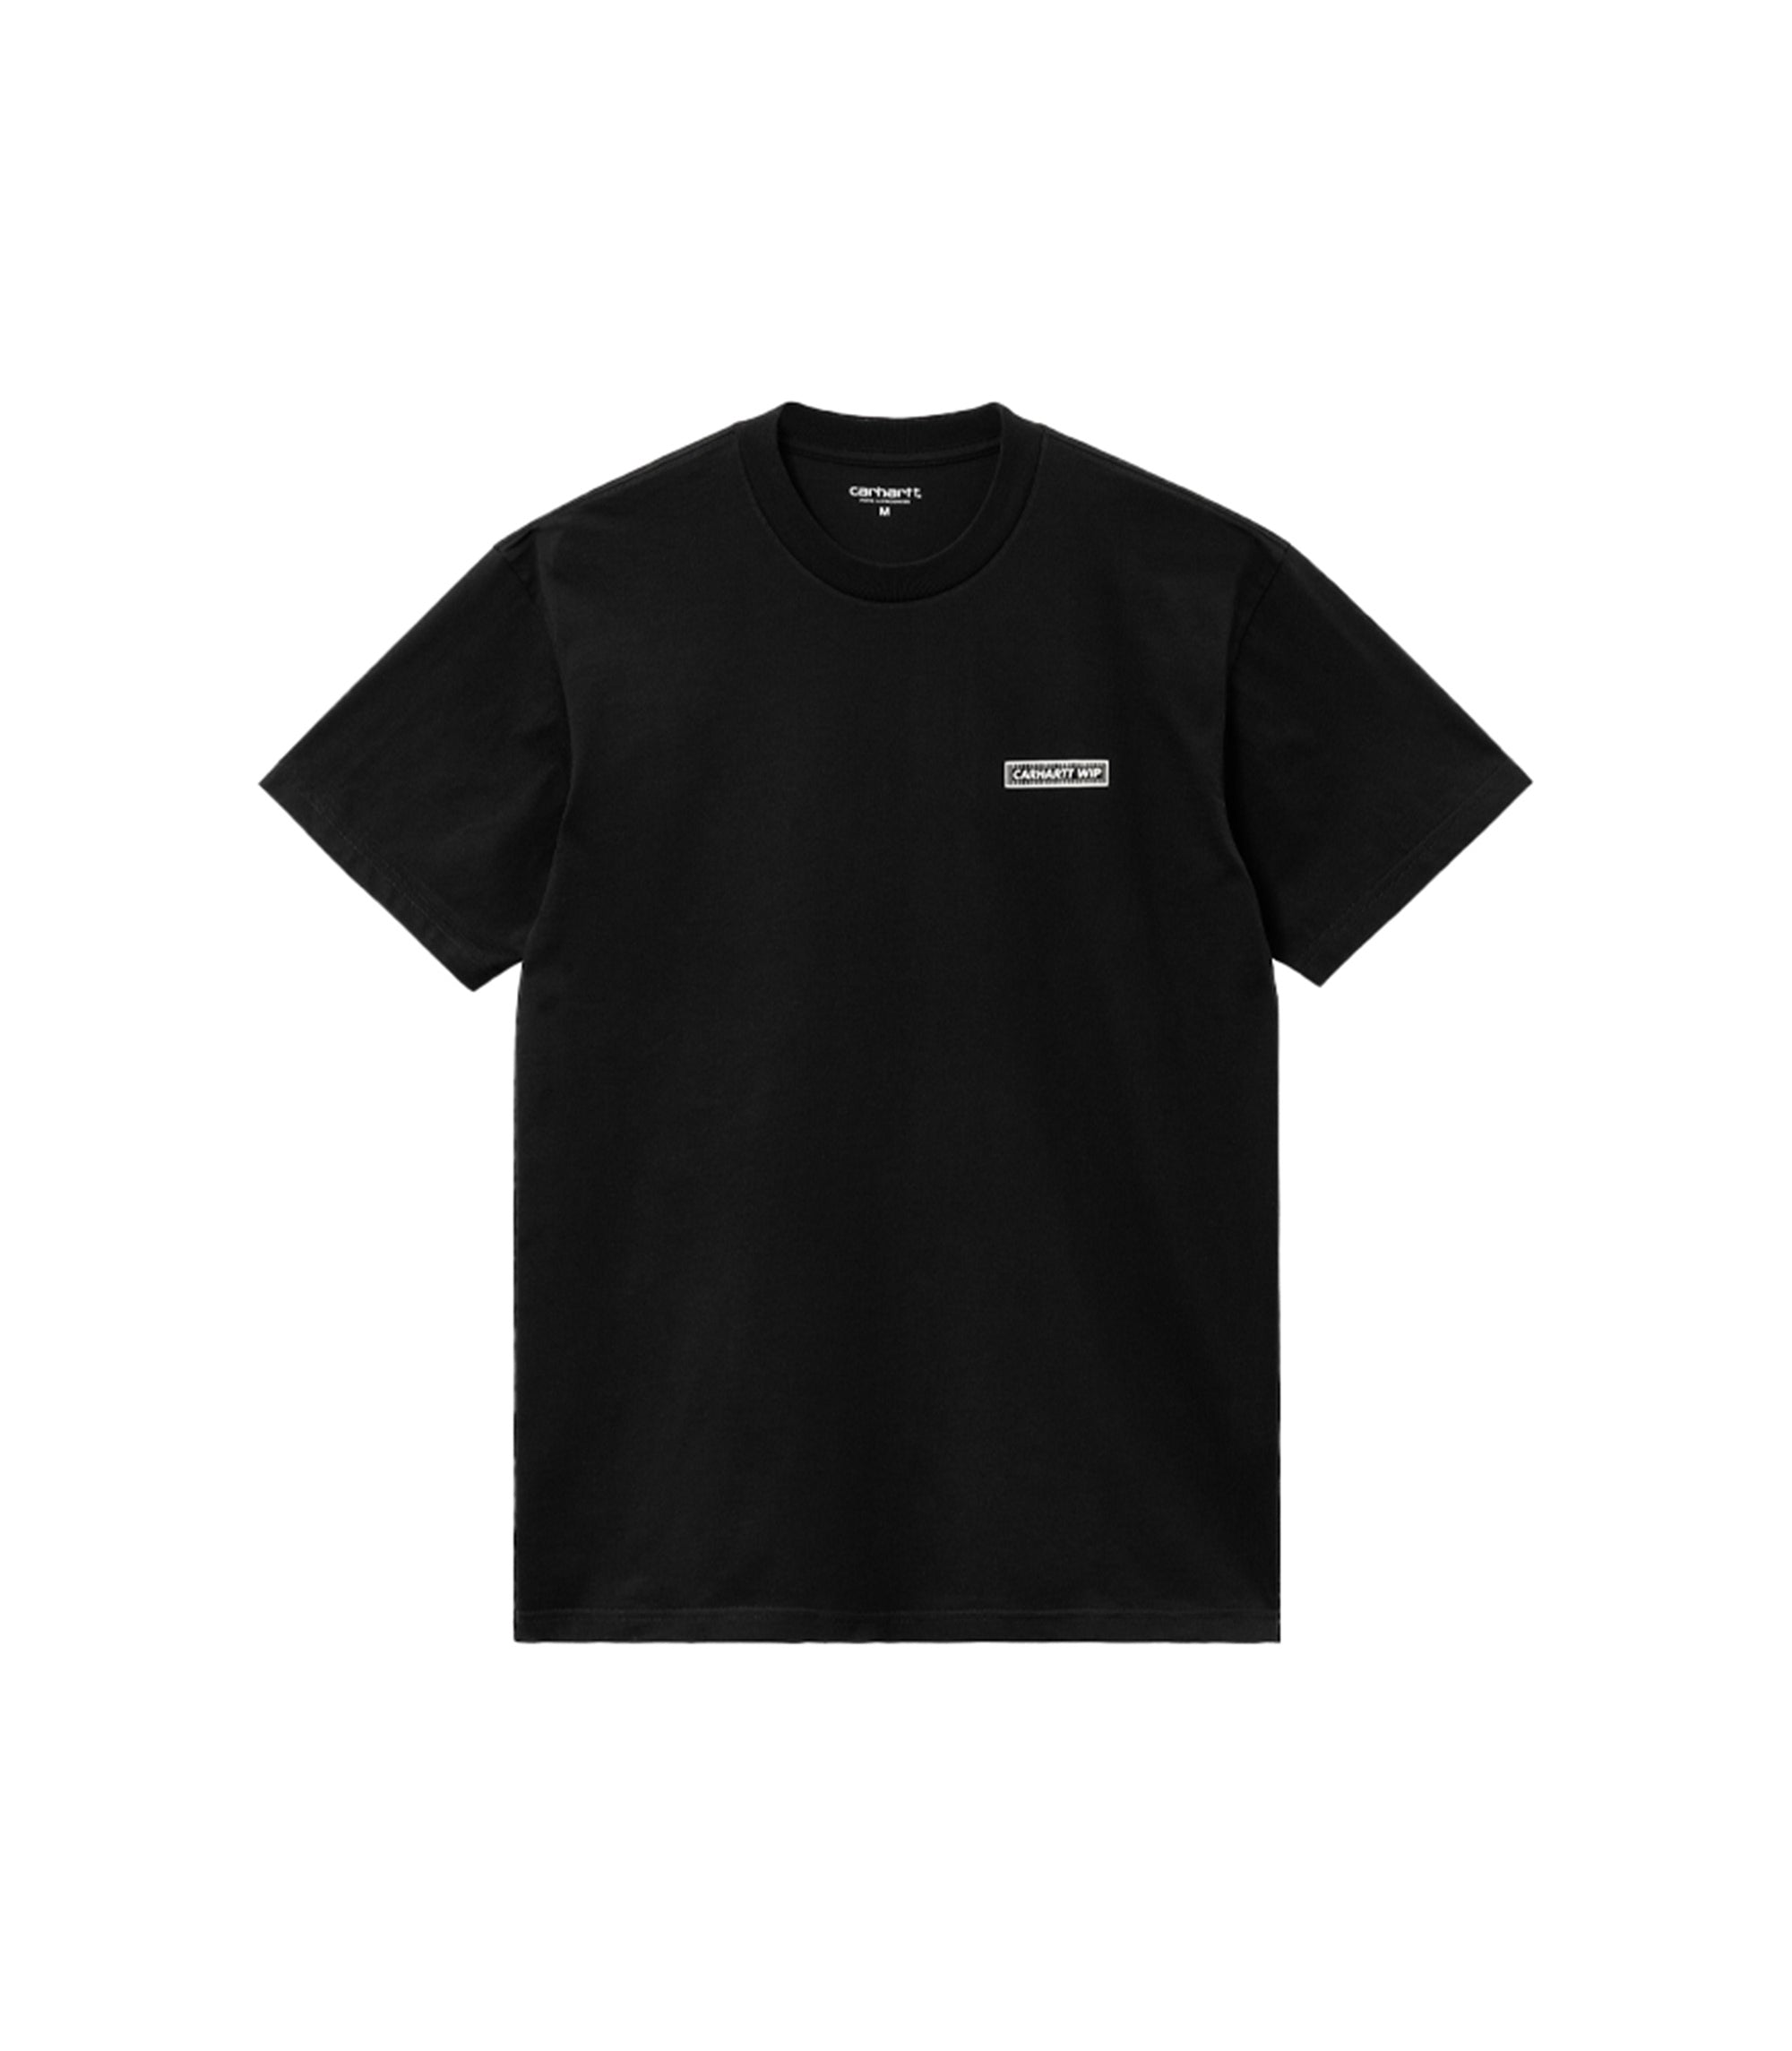 S/S Garden T-shirt - Black